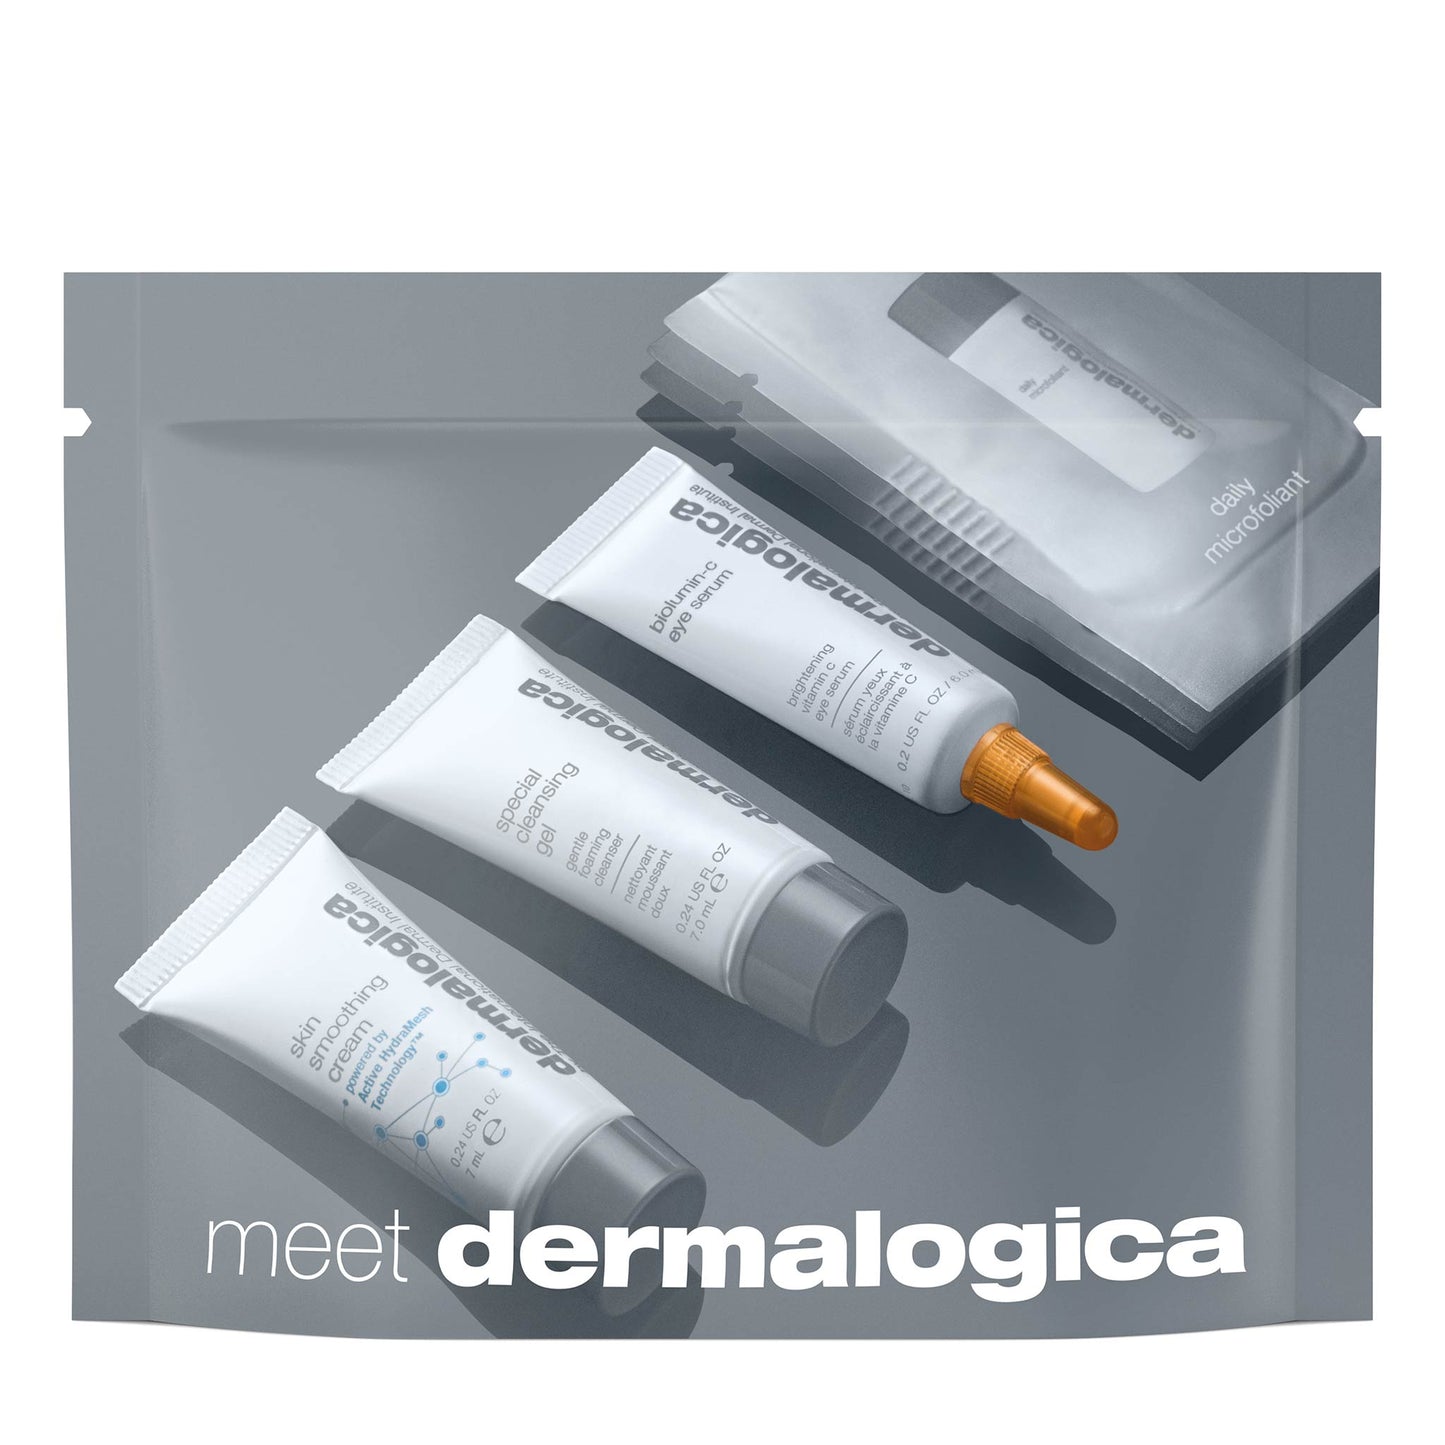 meet dermalogica kit pack